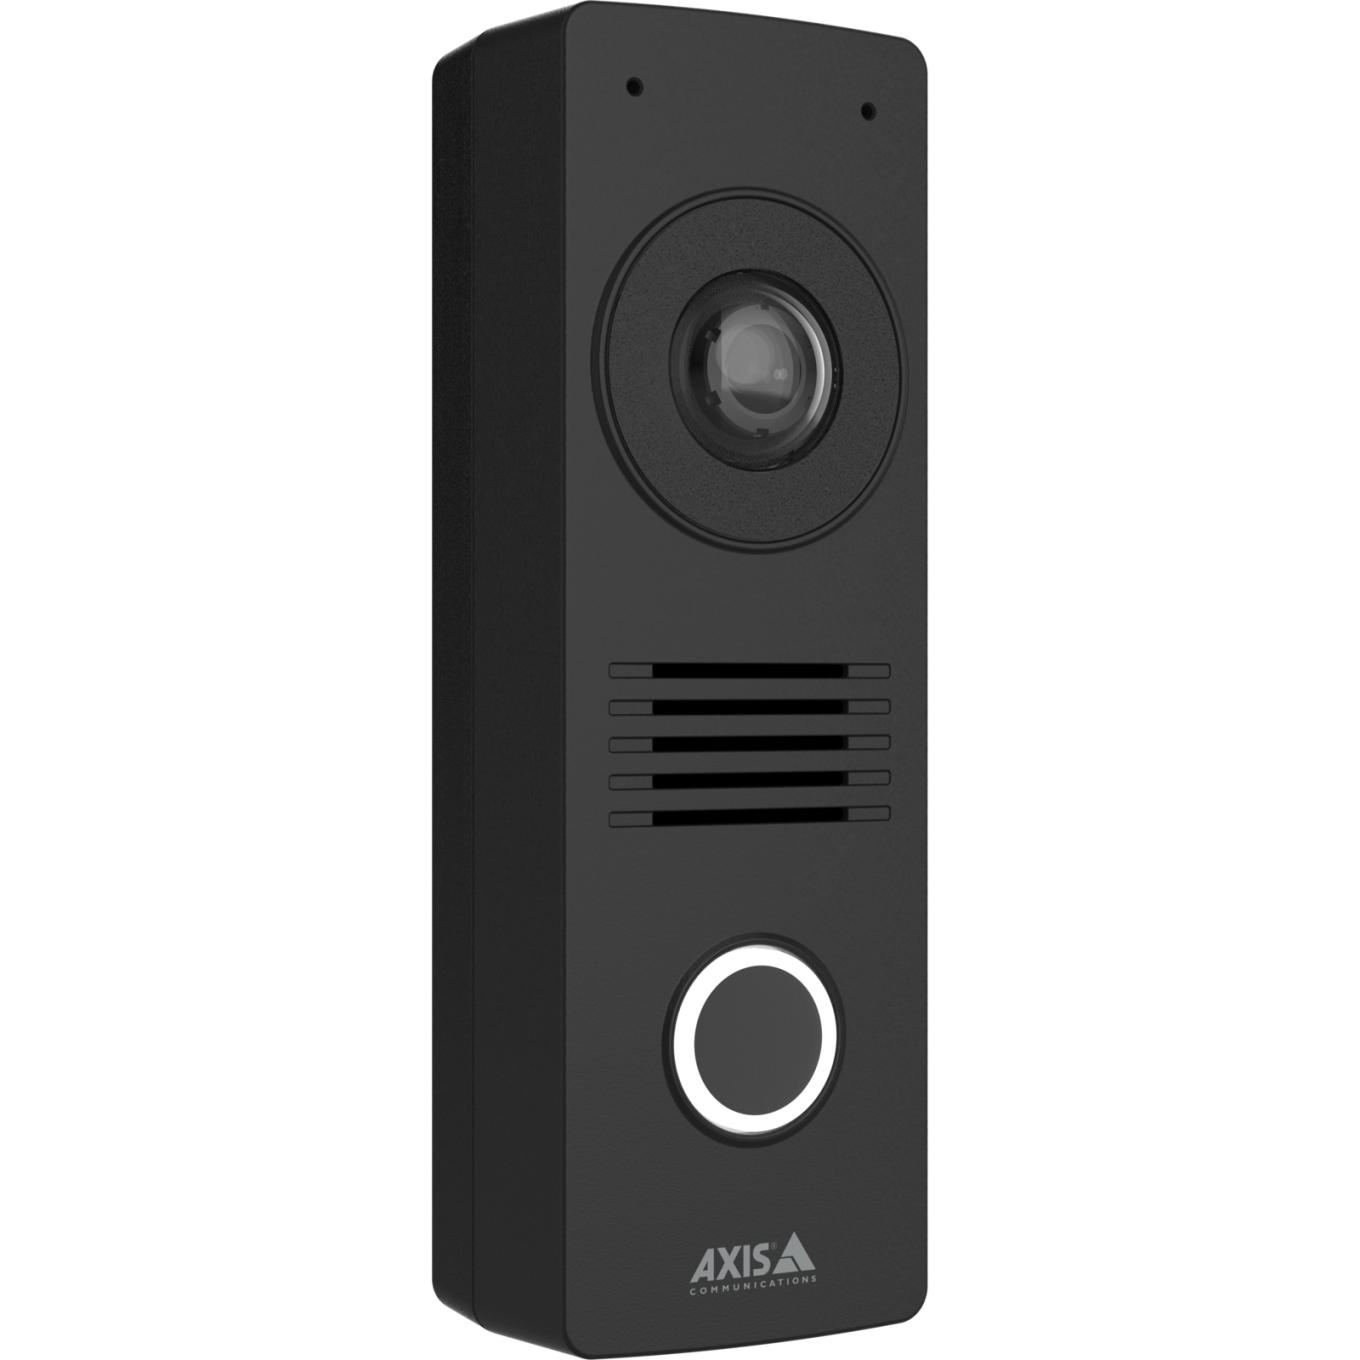 AXIS I8116-E Network Video Intercom | Axis Communications